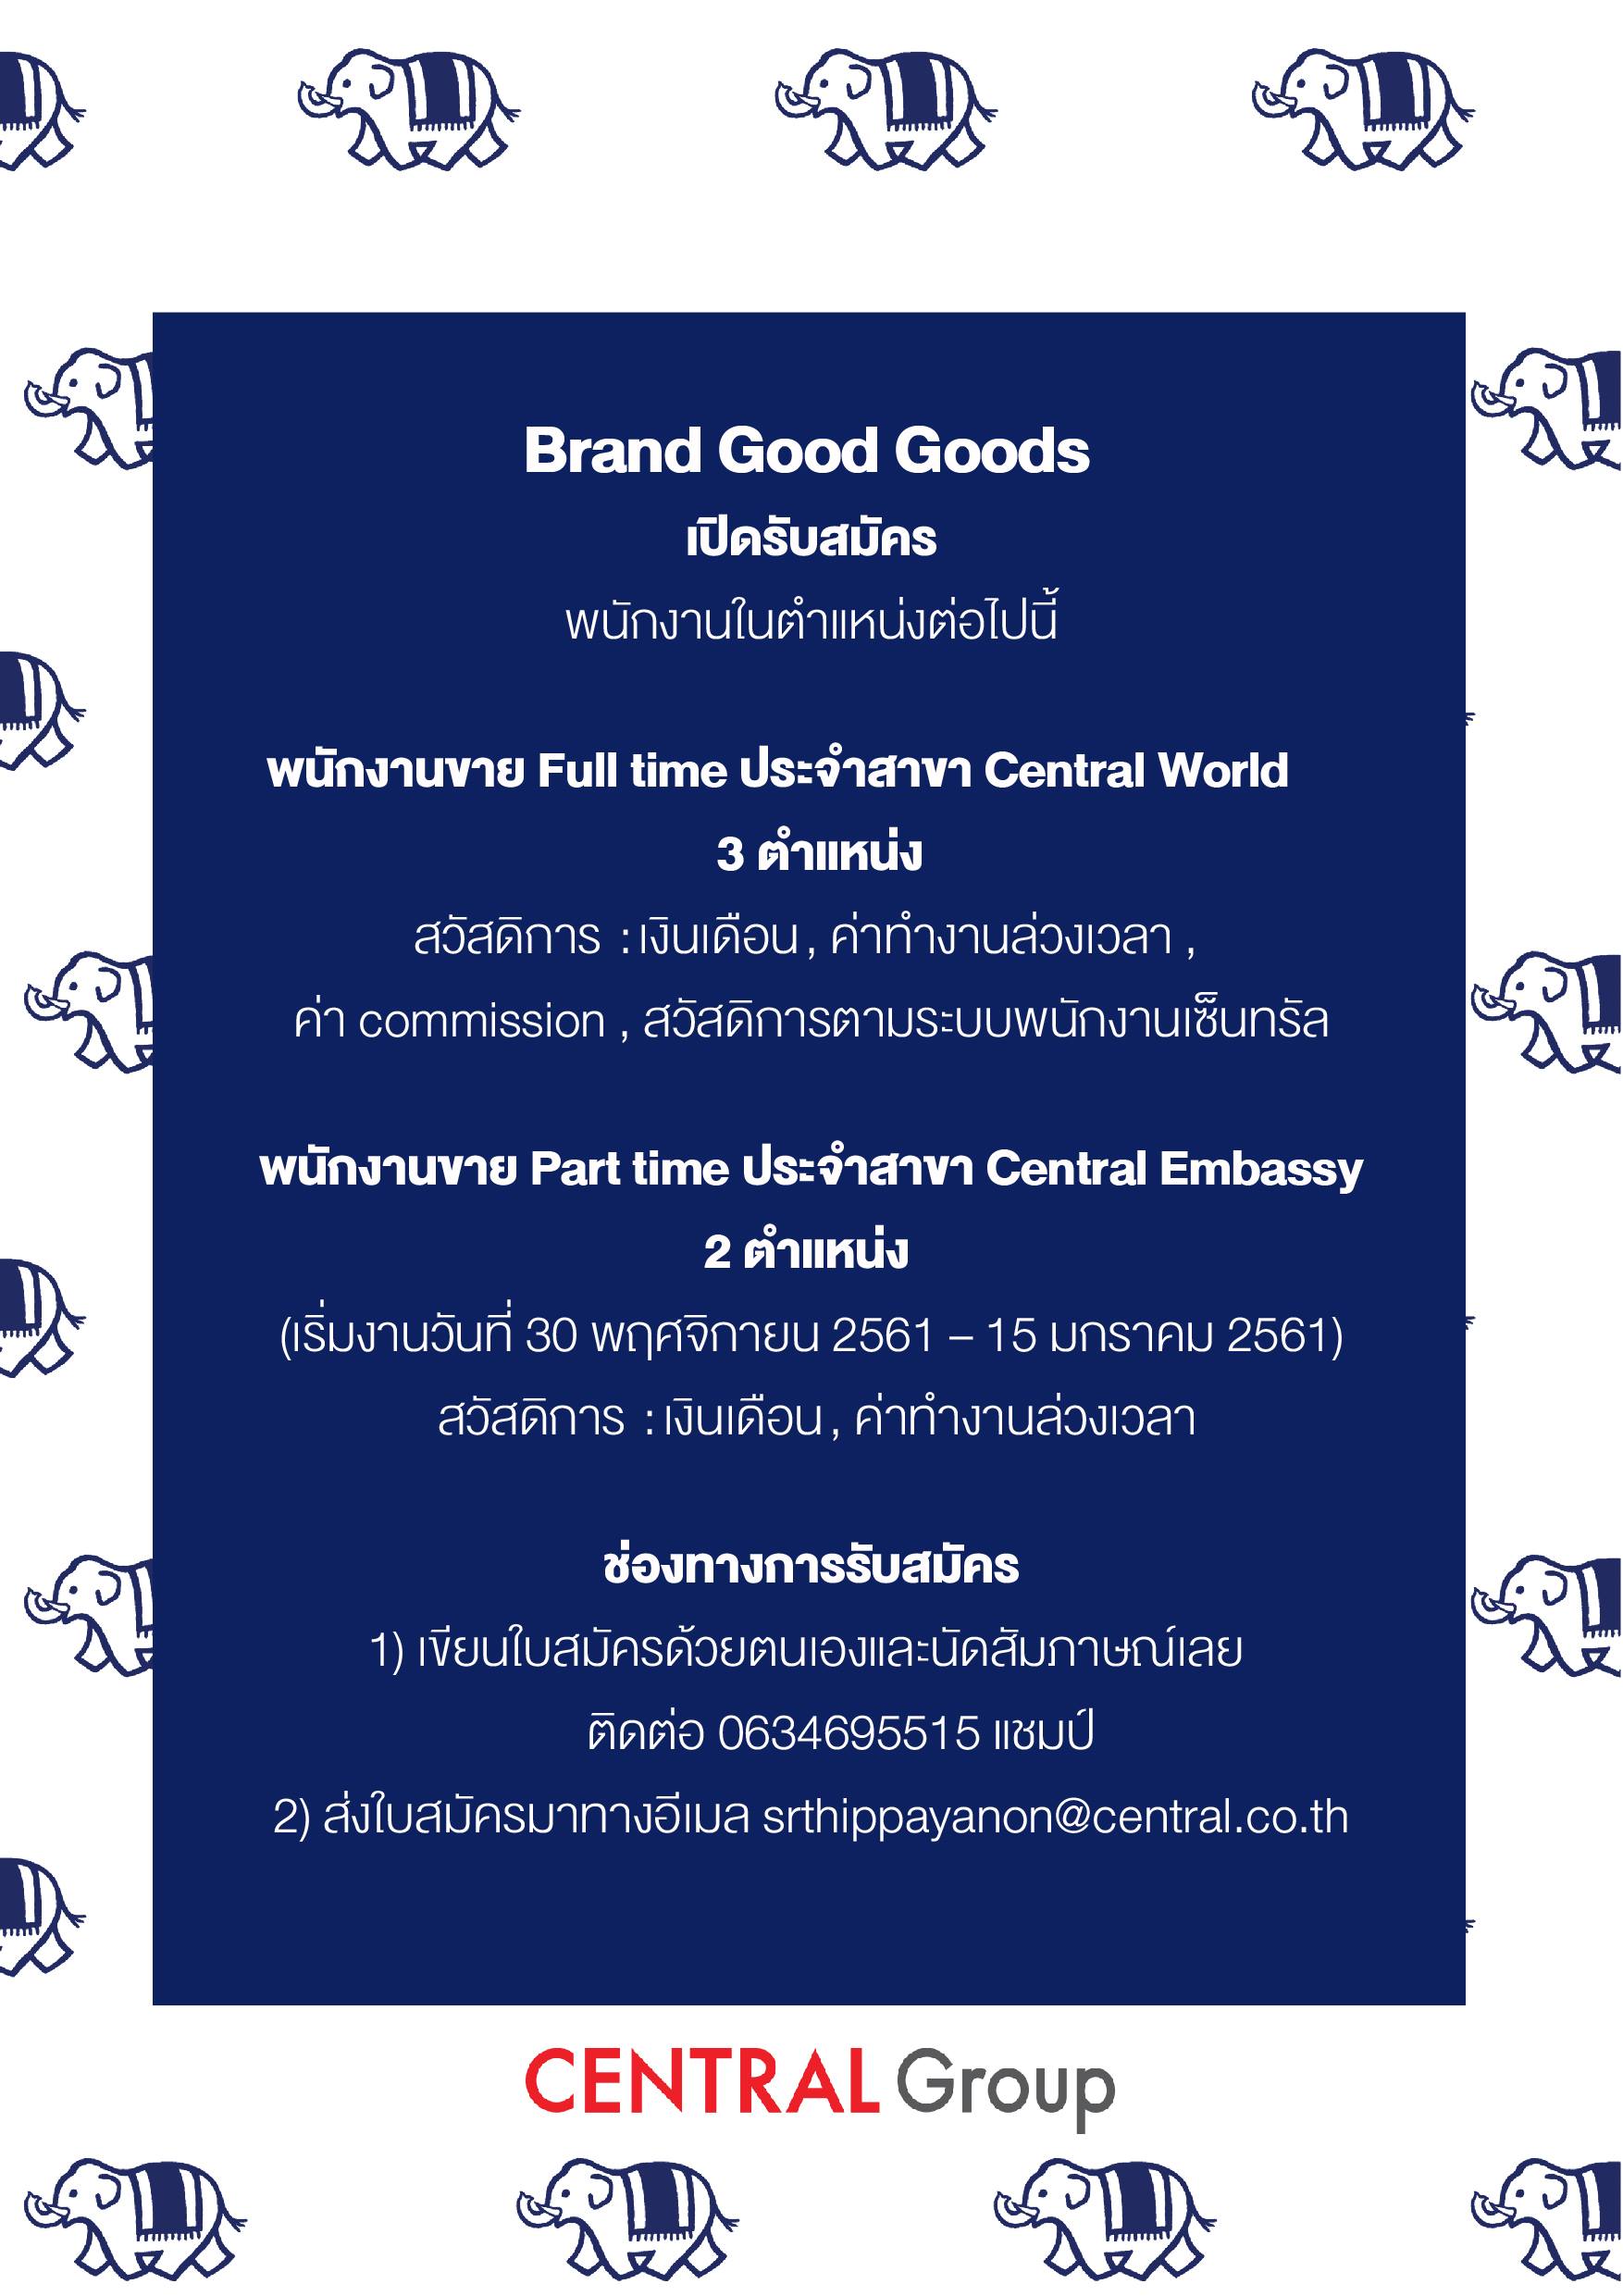 Brand good goods